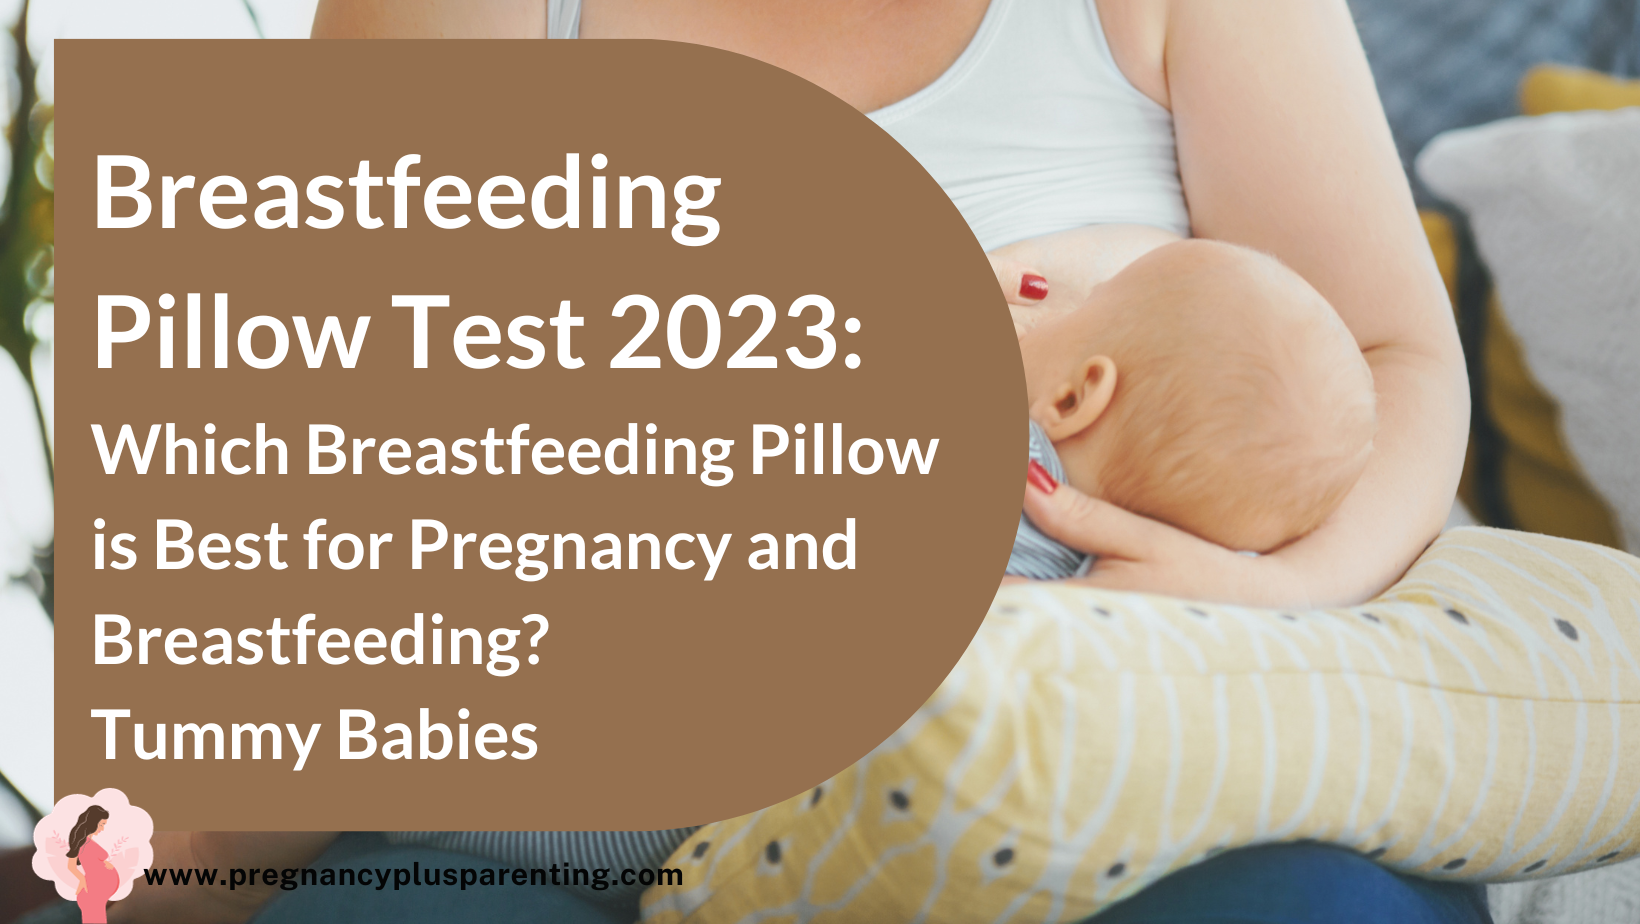 Breastfeeding Pillow Test 2023: Which Breastfeeding Pillow is Best for Pregnancy and Breastfeeding?